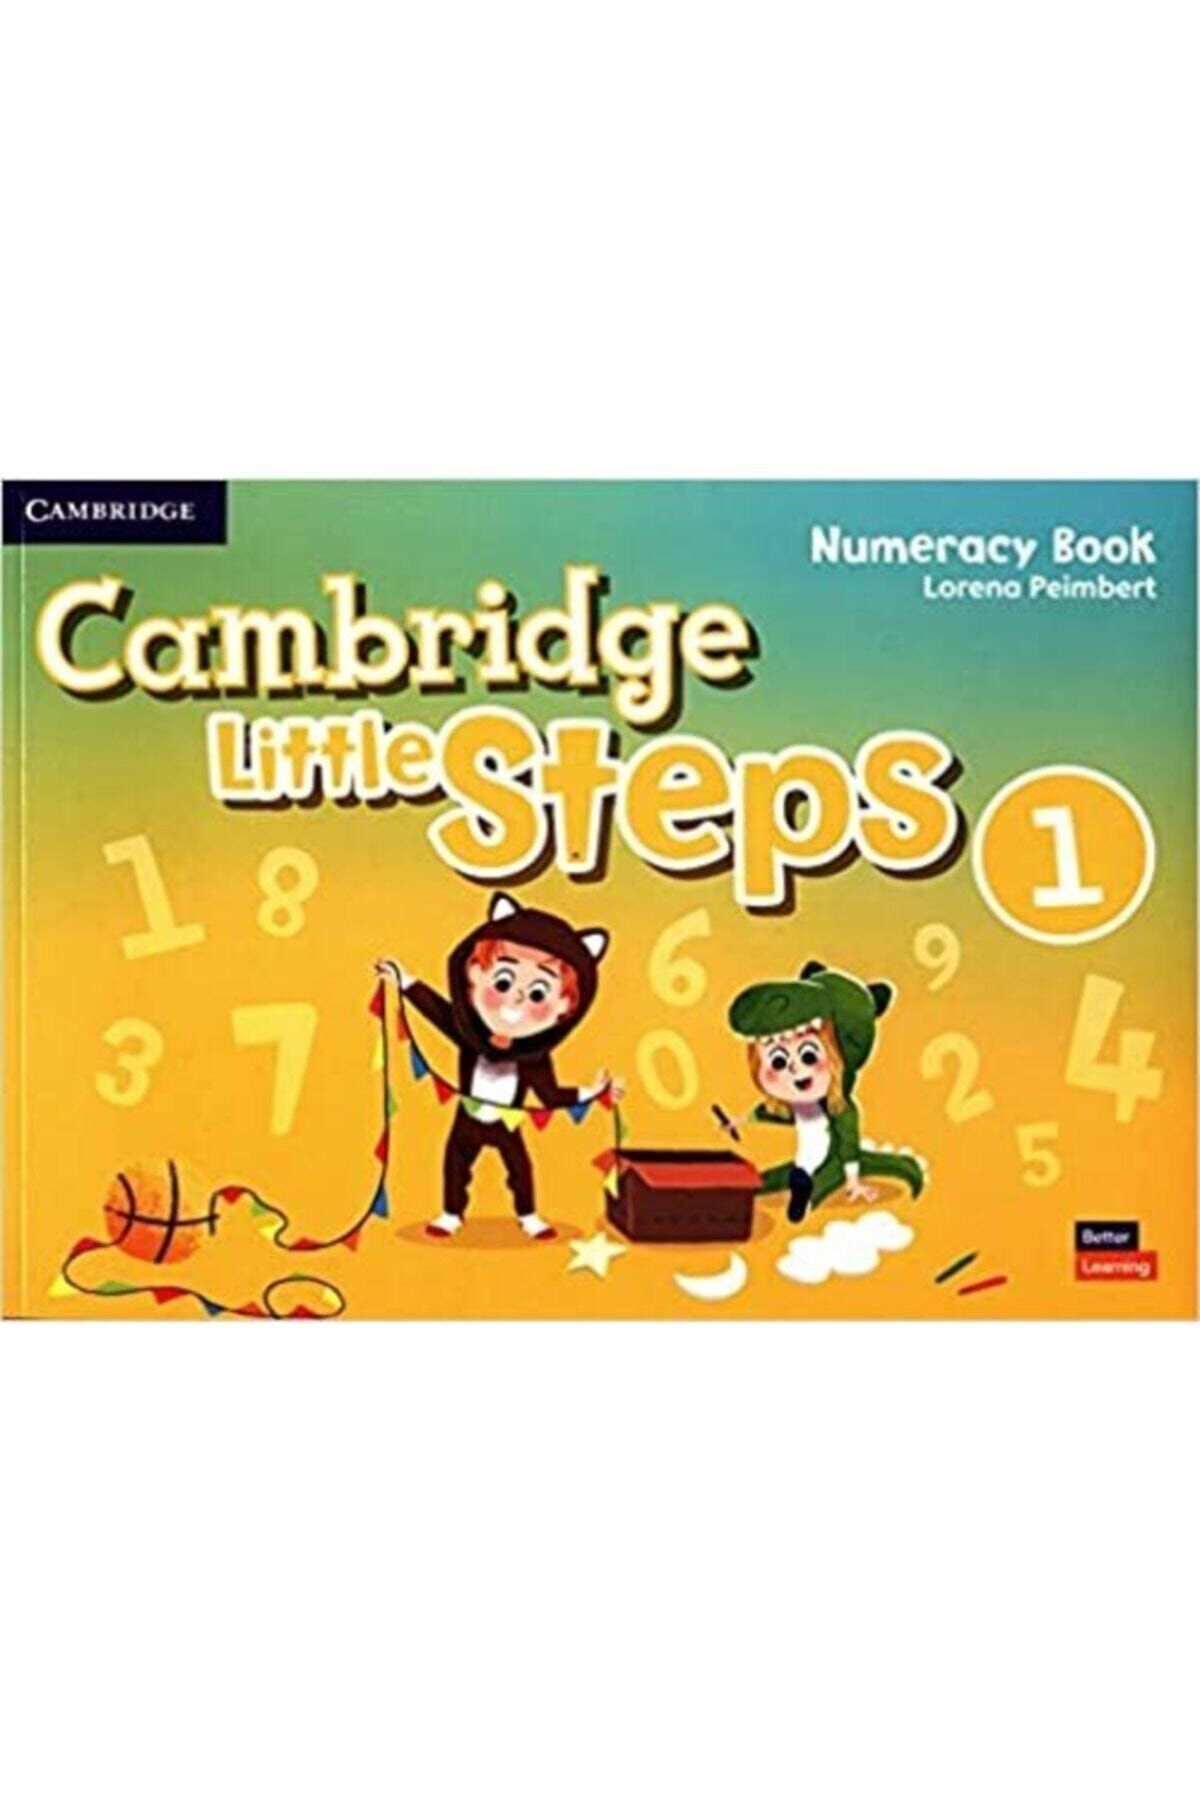 Cambridge University Little Steps Level 1 Numeracy Book